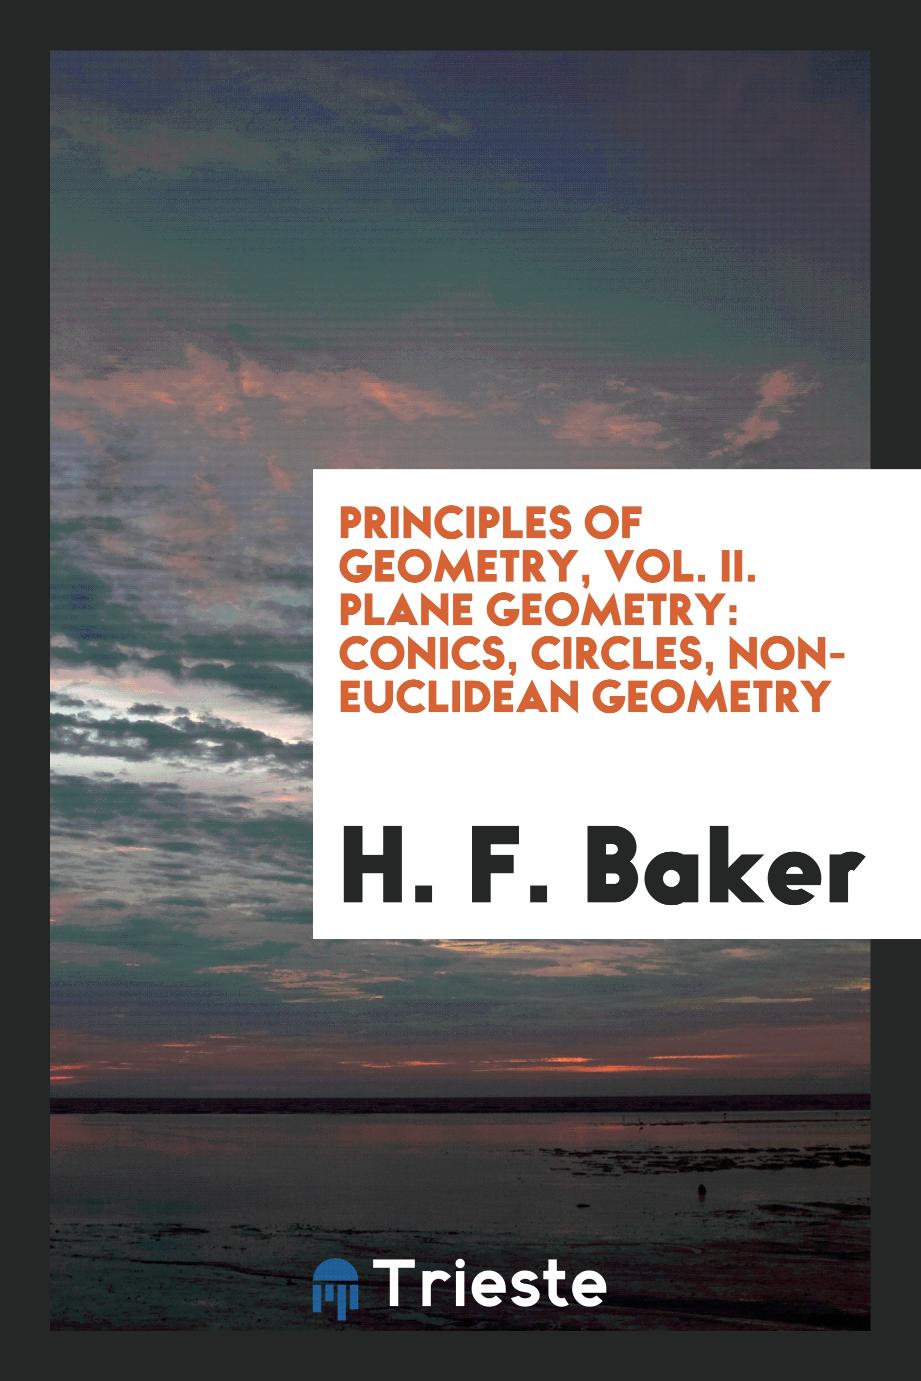 Principles of geometry, Vol. II. Plane geometry: conics, circles, non-euclidean geometry